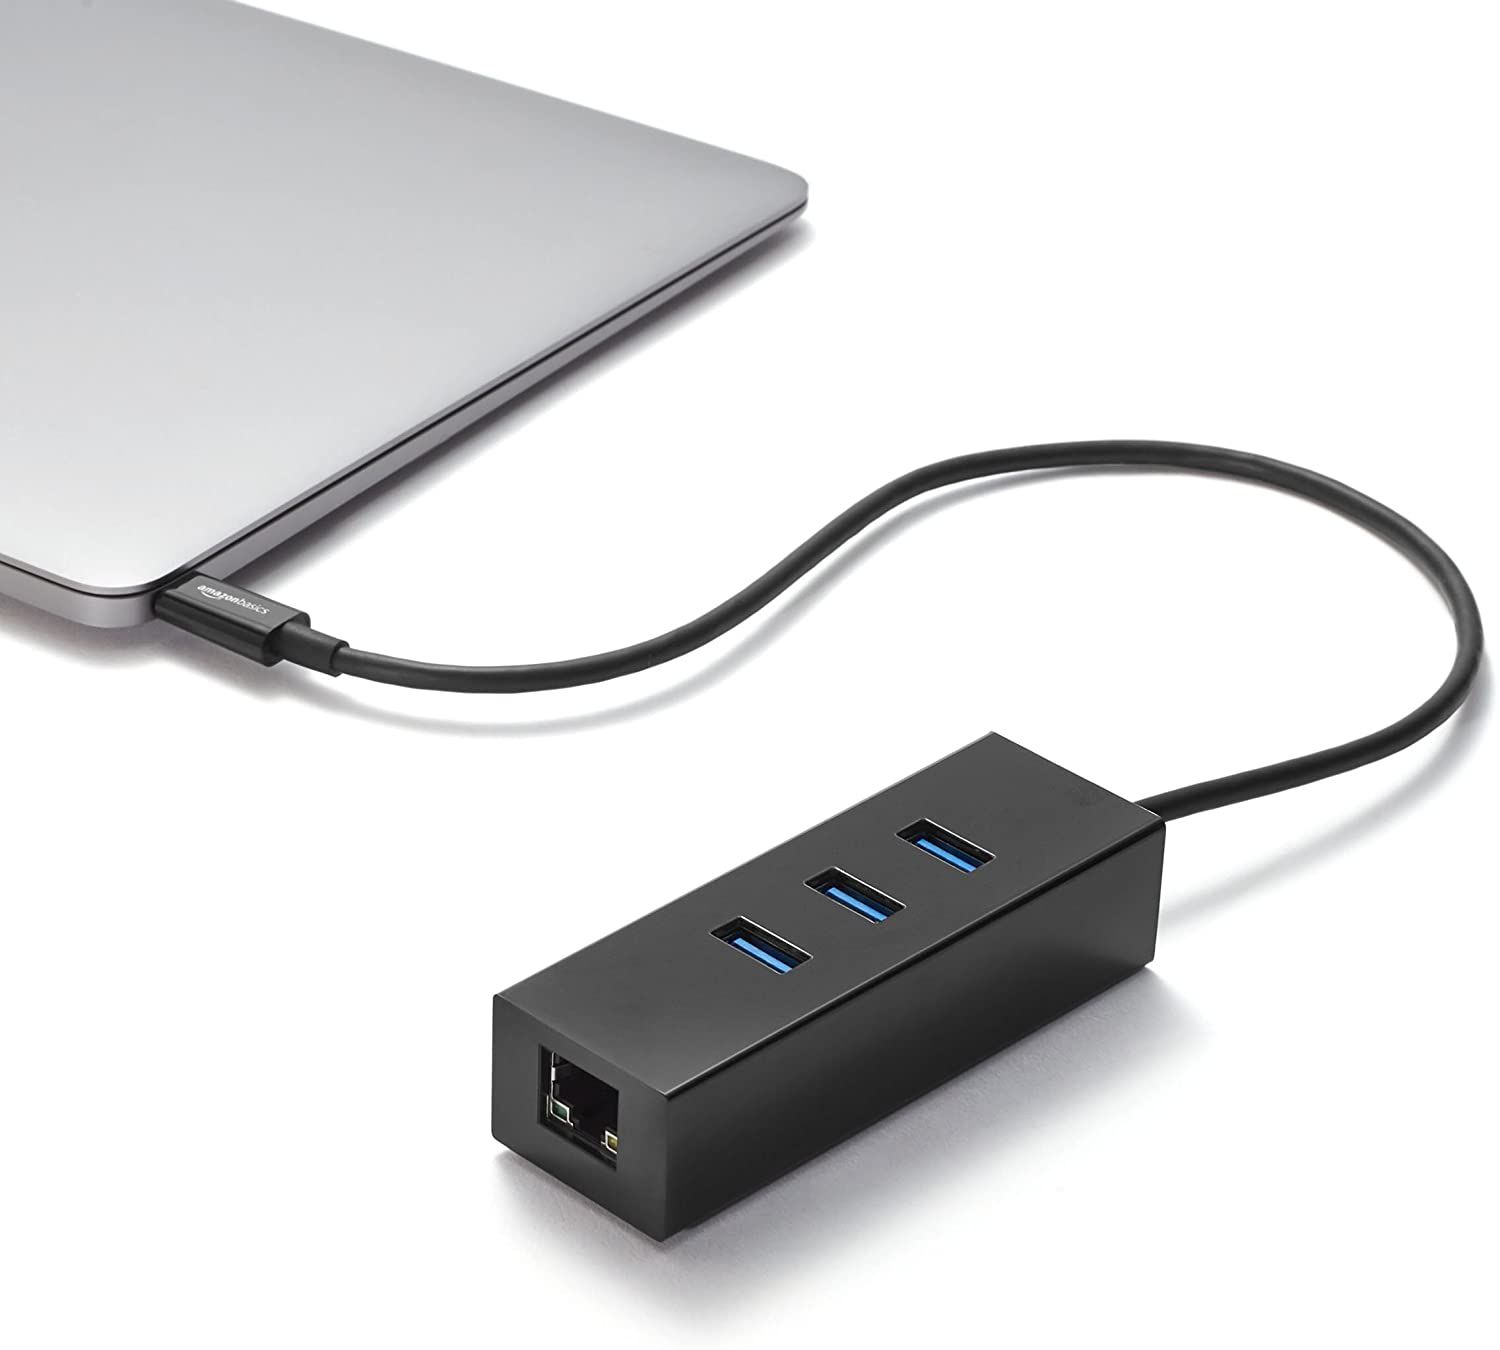 Amazon Basics USB-C Hub Connected to a Laptop